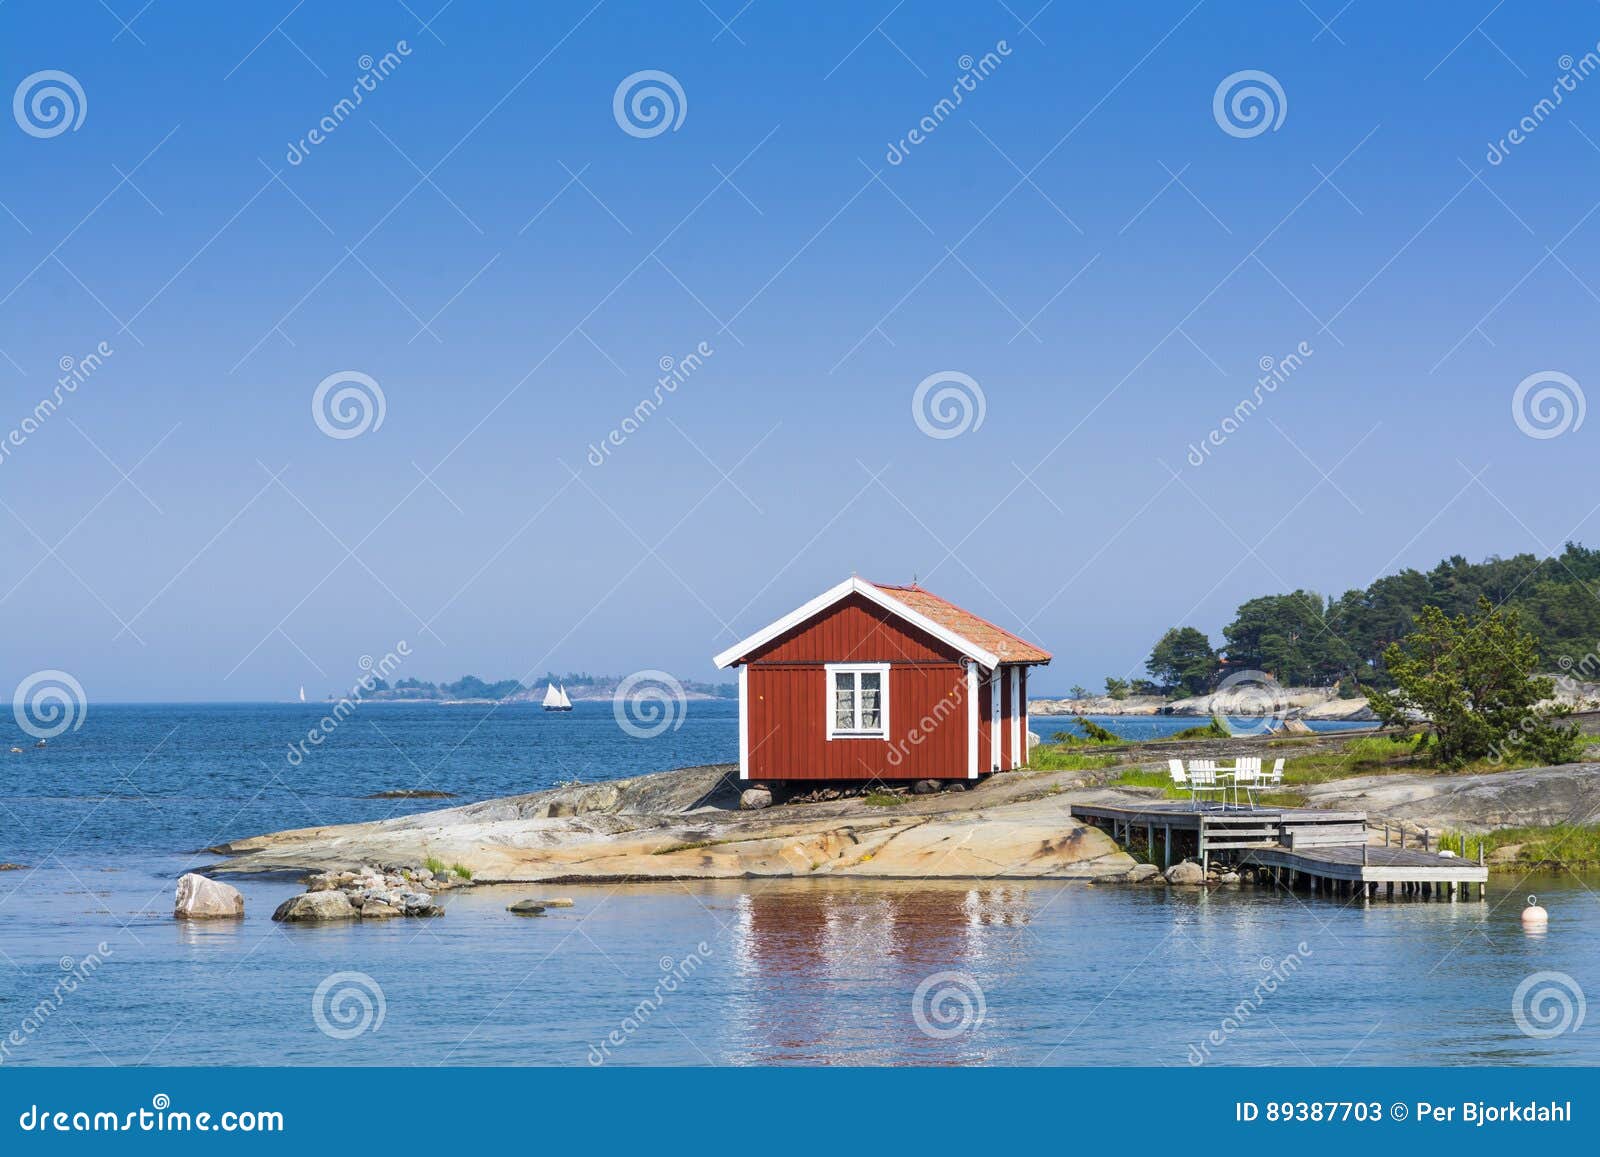 stockholm archipelago: small red summerhouse